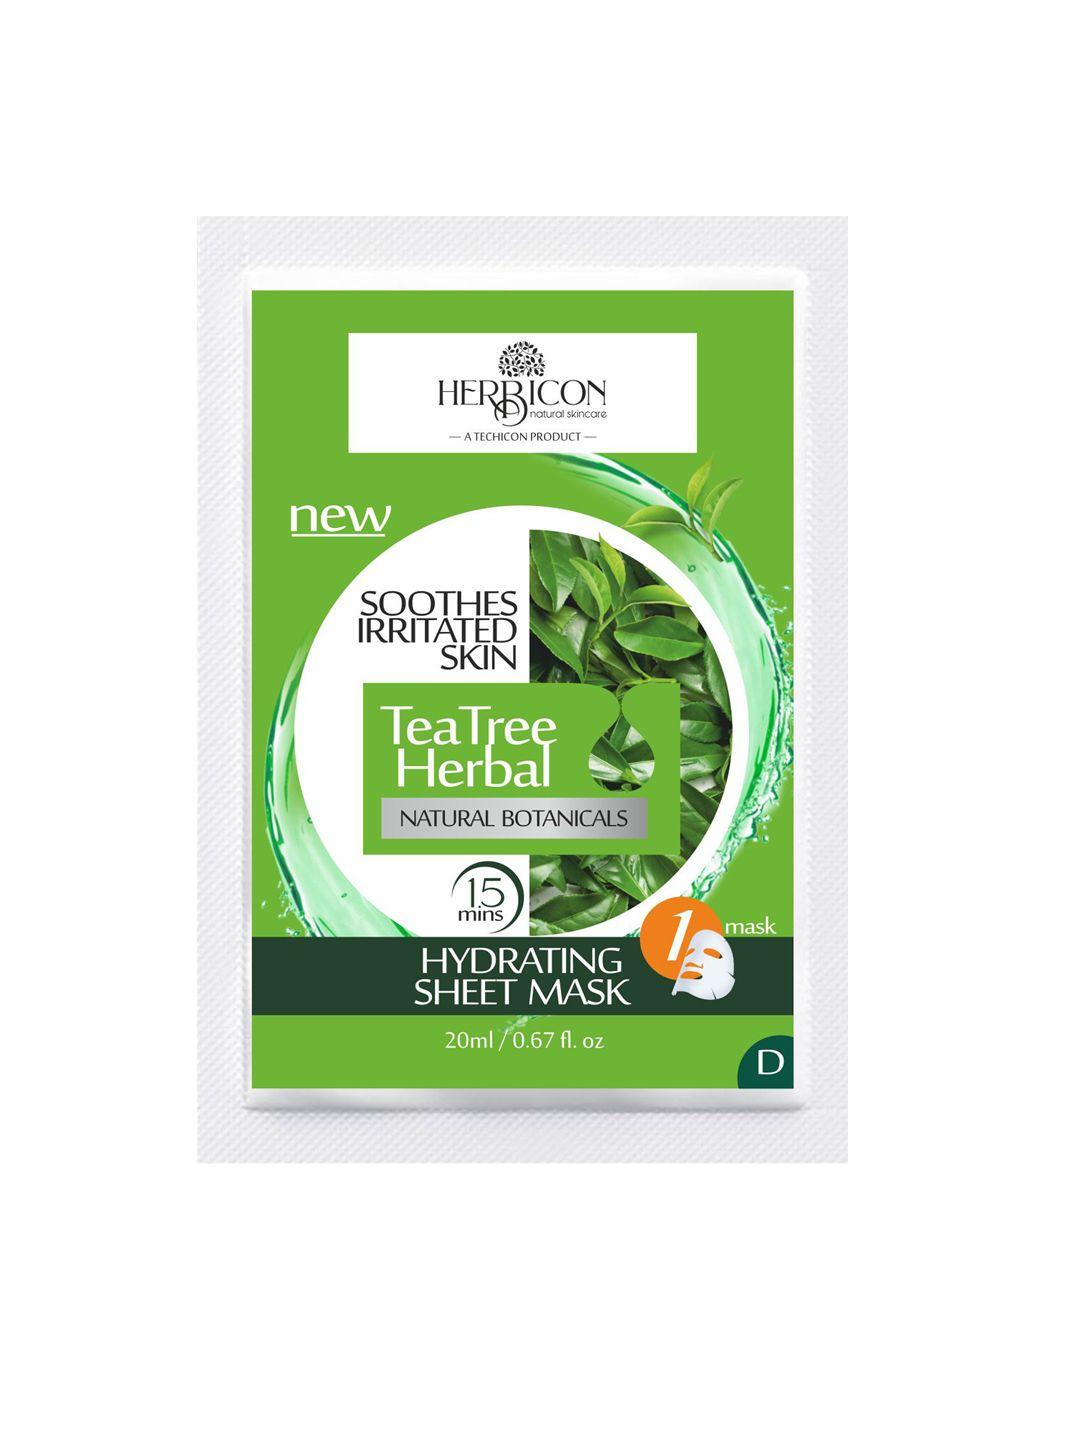 herbicon green tea tree herbal face sheet mask